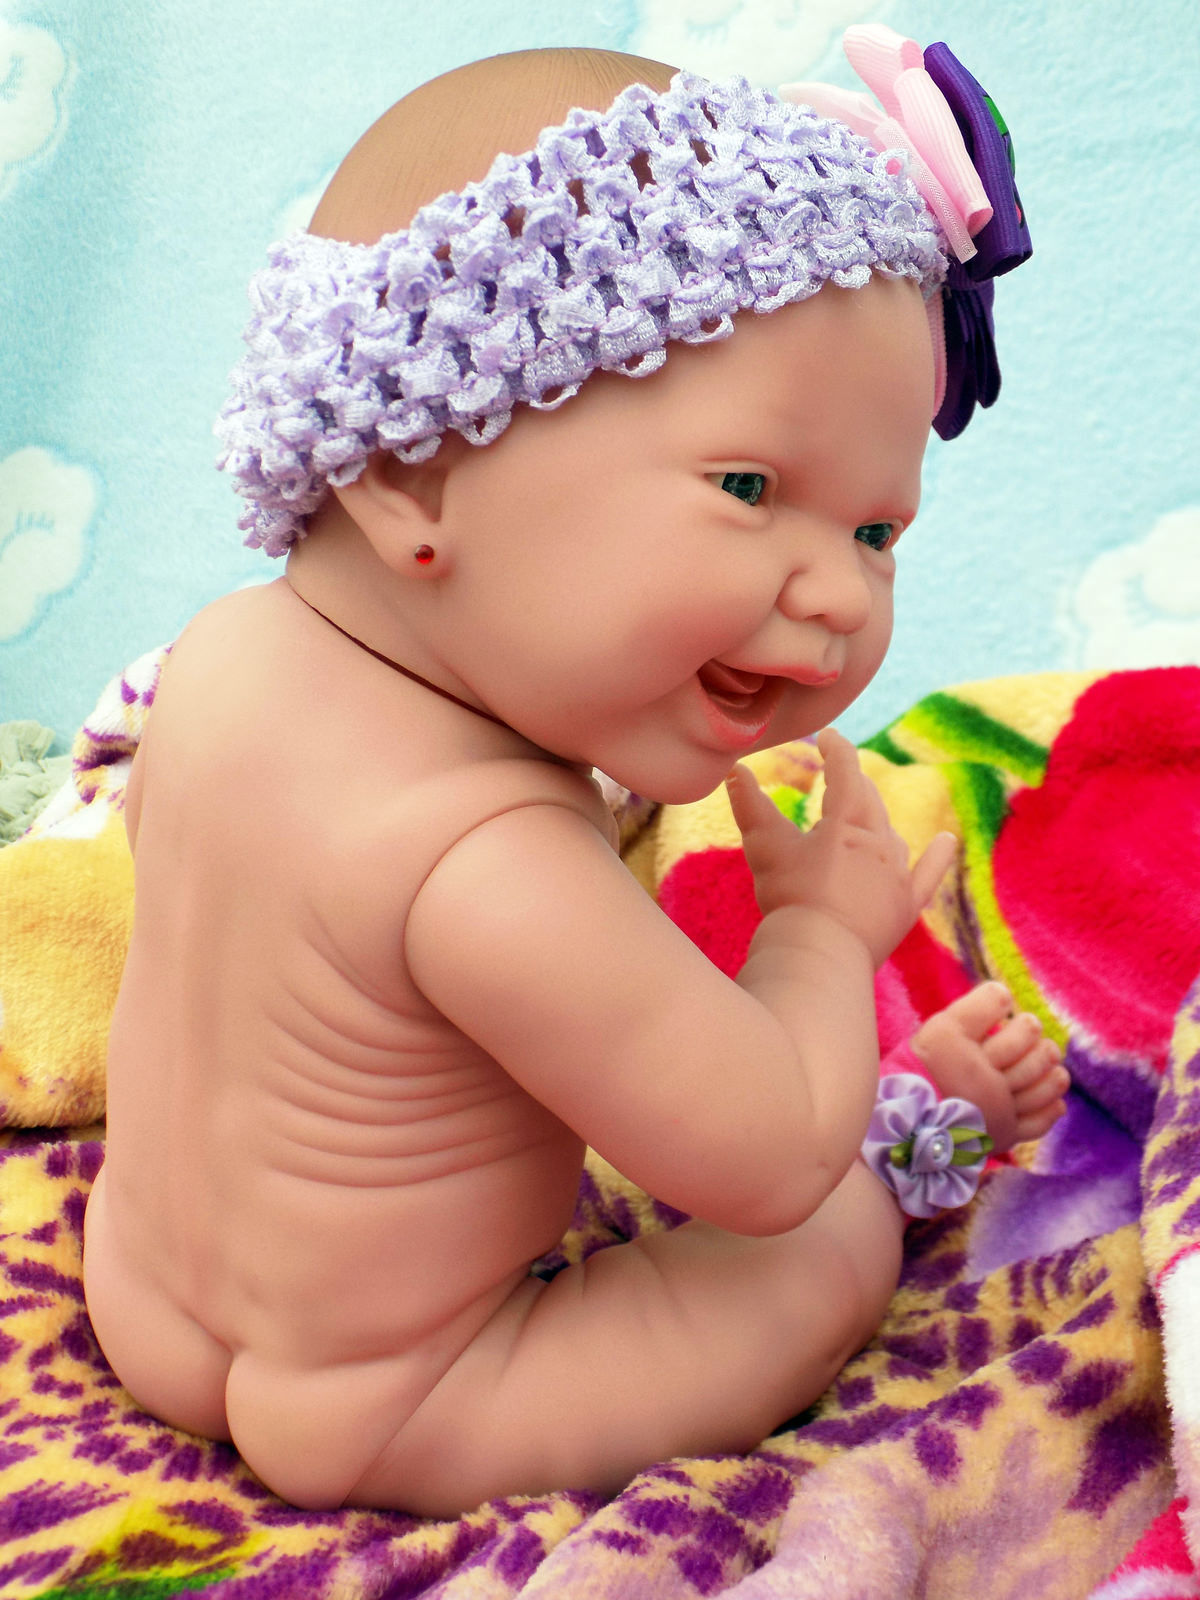 NEW BABY GIRL SMILING DOLL REAL REBORN BERENGUER 15" INCH VINYL LIFE LIKE ALIVE 